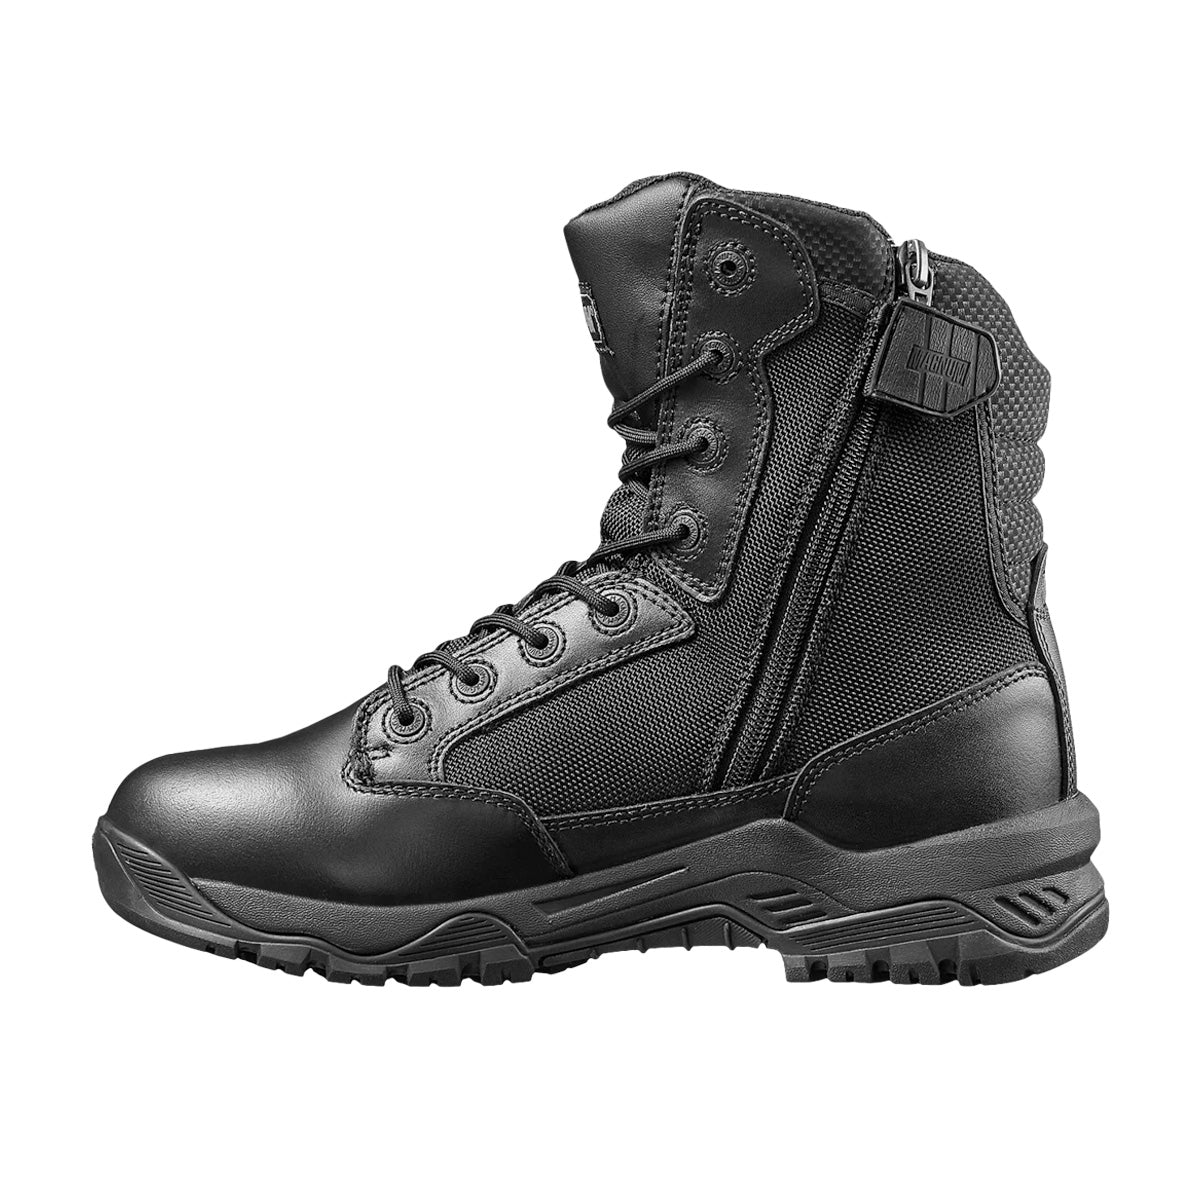 Magnum Strike Force 8.0 Side-Zip Composite Toe Women's Boots Black Tactical Distributors Ltd New Zealand